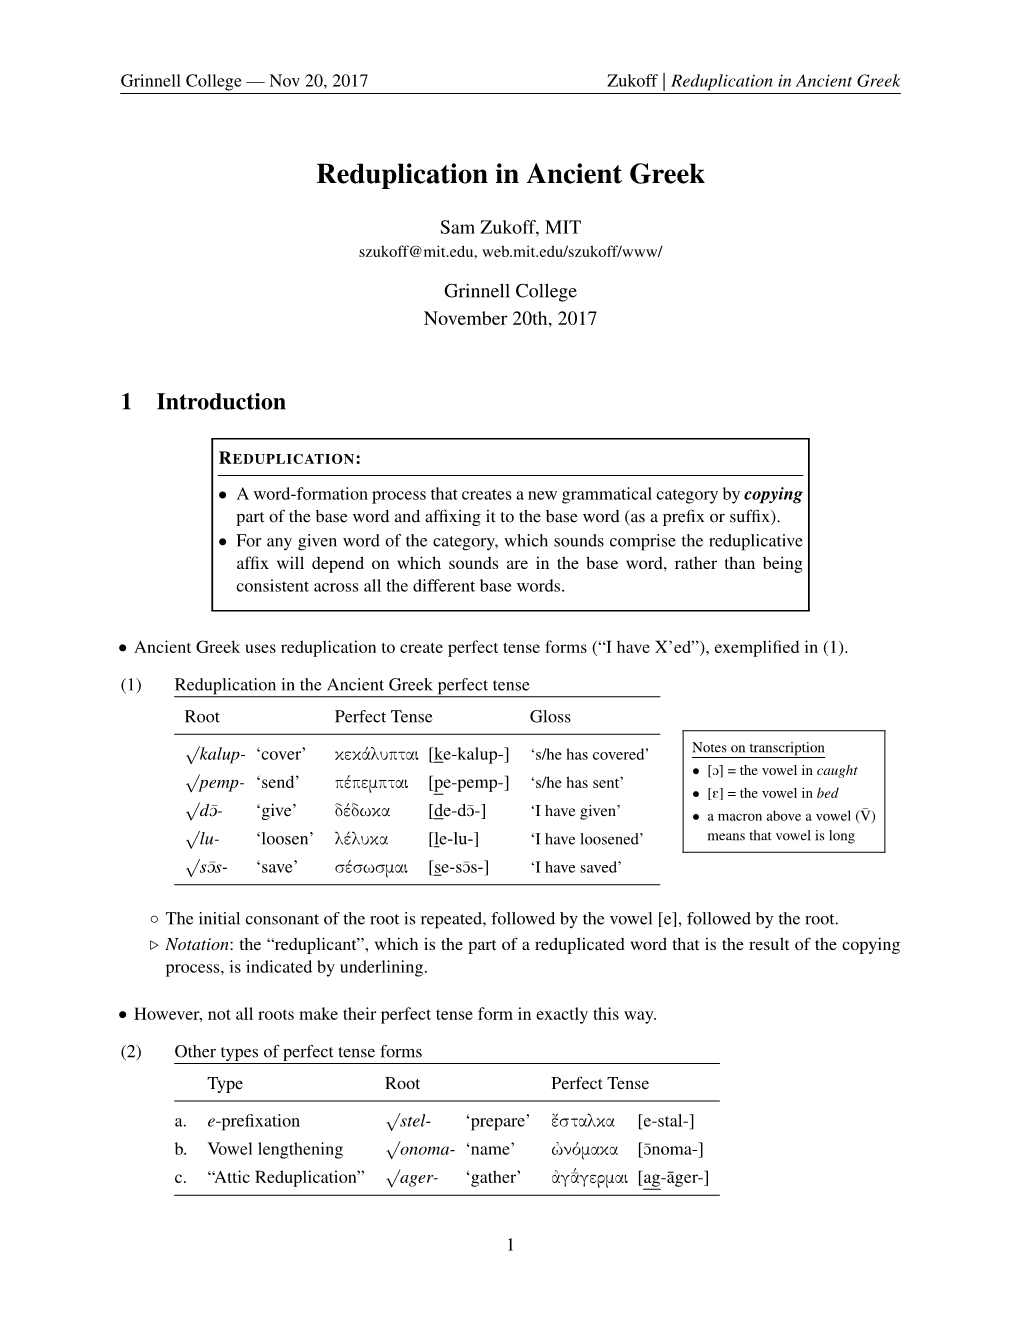 Reduplication in Ancient Greek